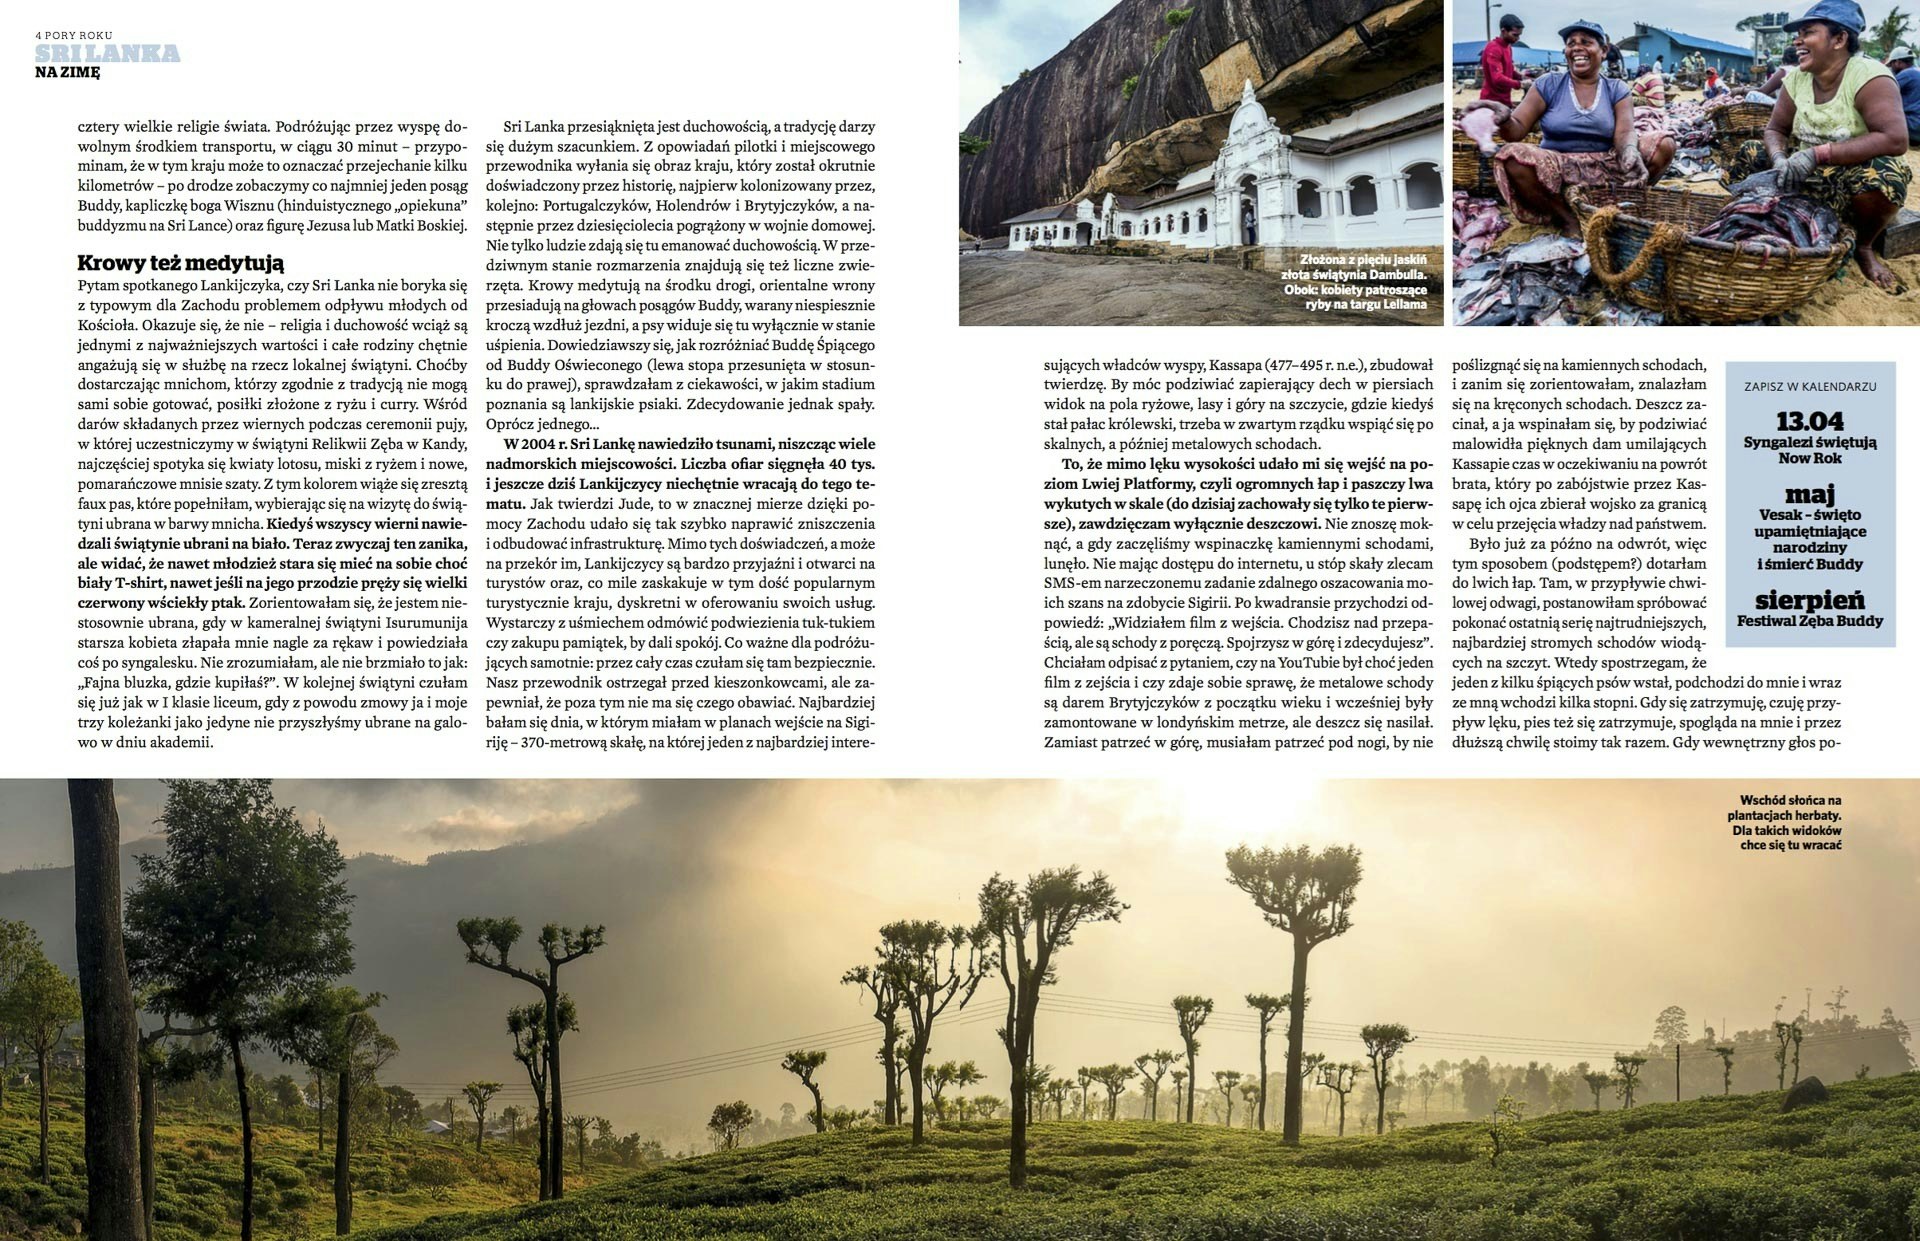 National Geographic Traveller Magazine Sri Lanka Article 2